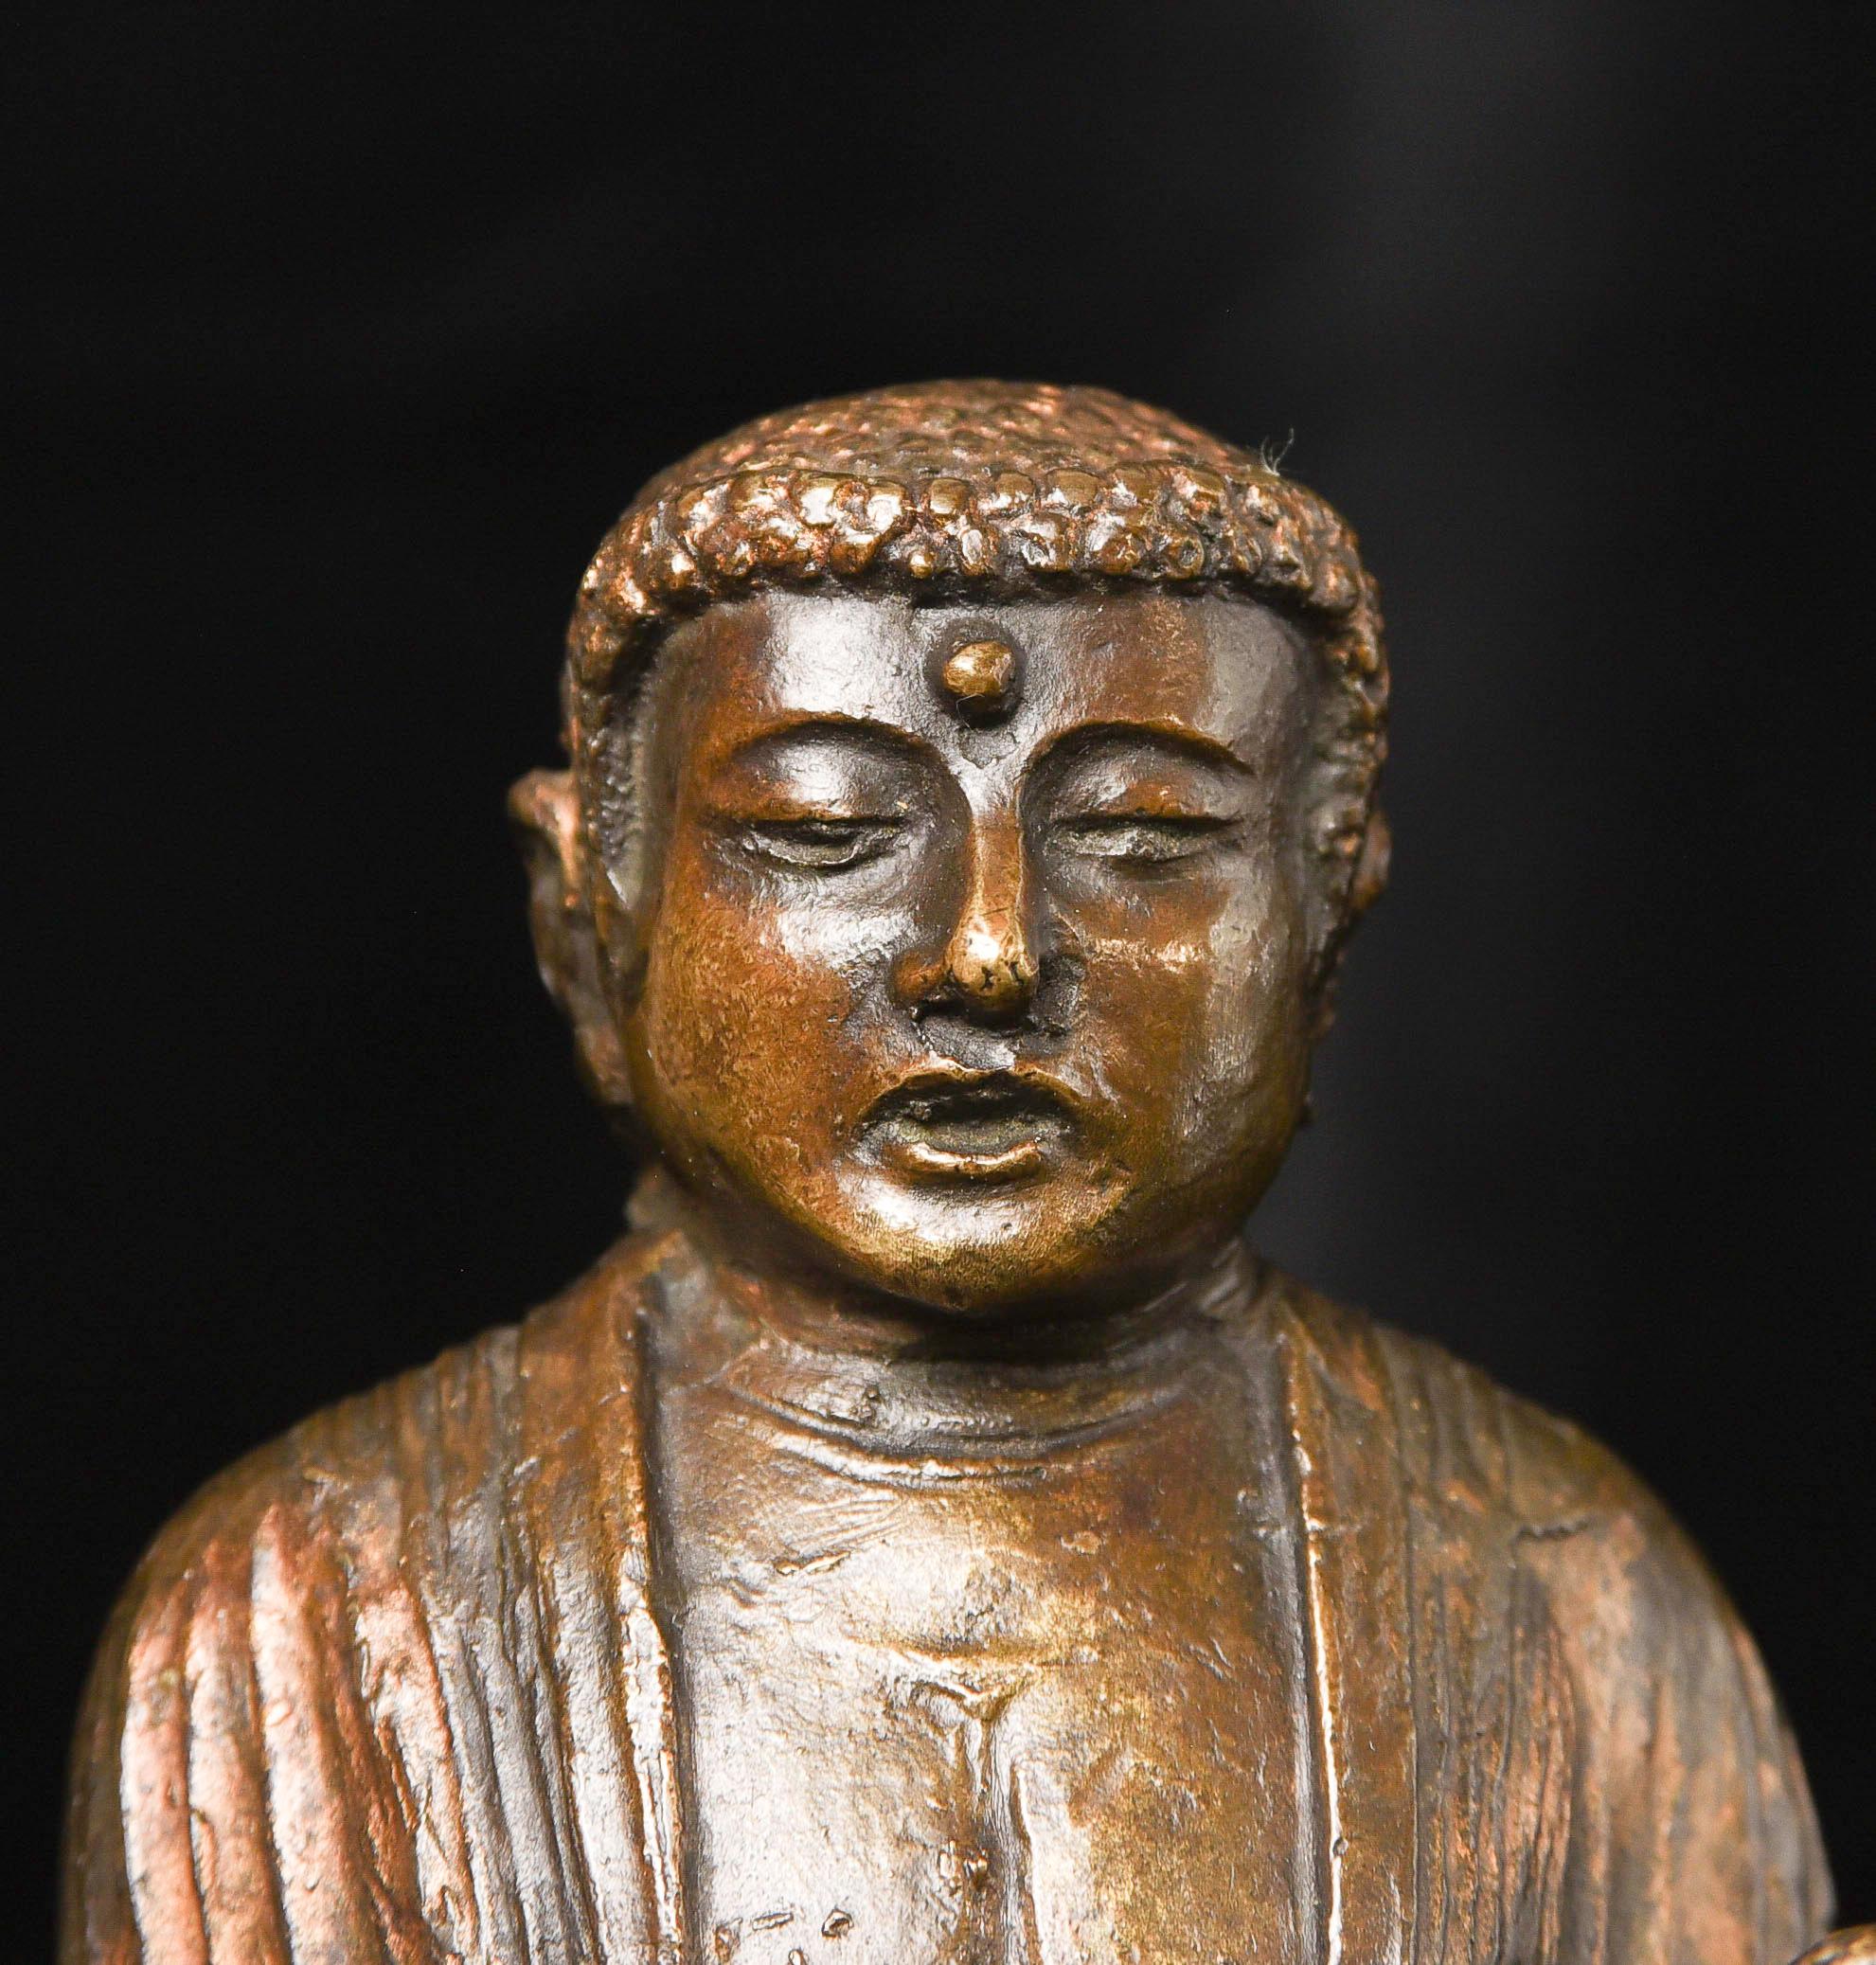 Antique Korean or Japanese Buddha - 9719 5